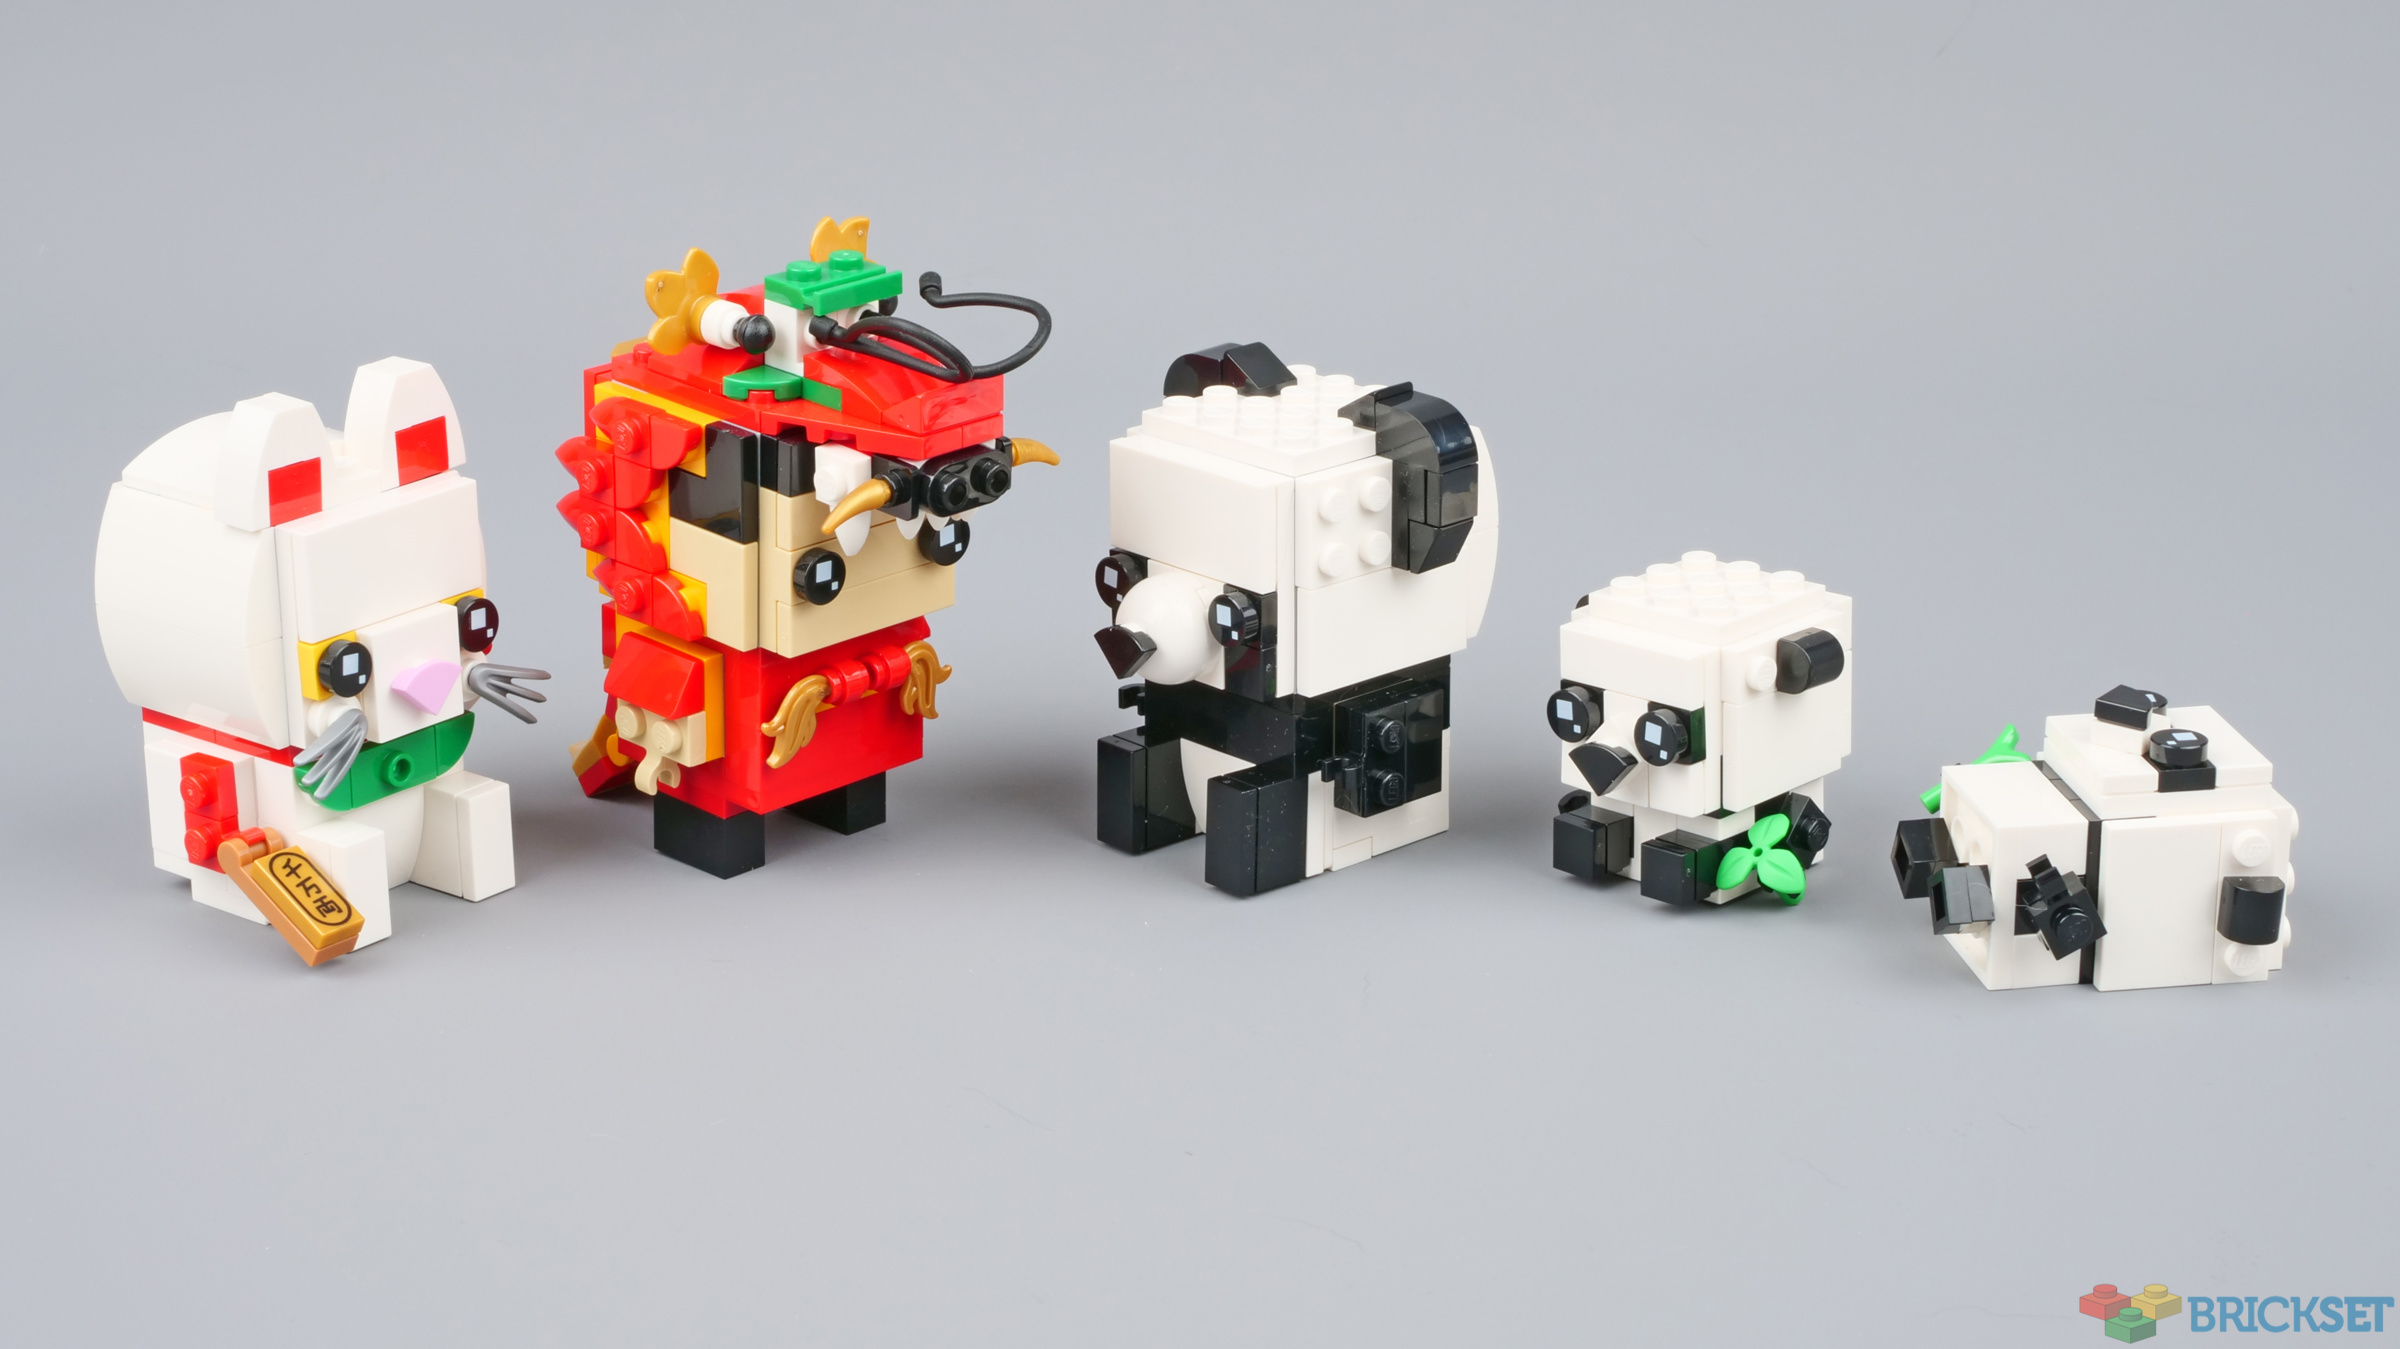 Review: LEGO 40466 Chinese New Year Pandas - Jay's Brick Blog